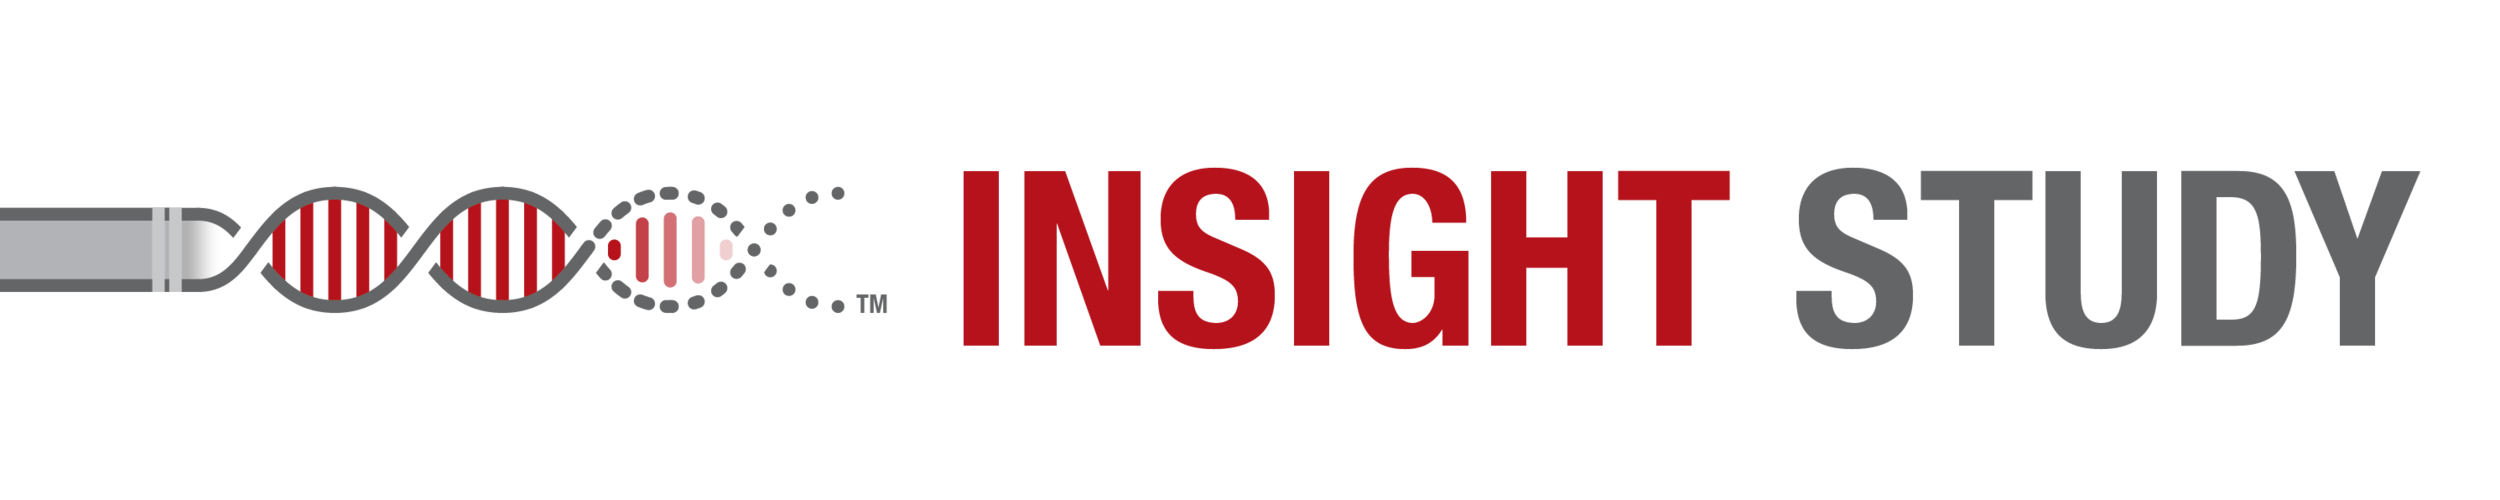 INSIGHT Study - Clinical Study Logo